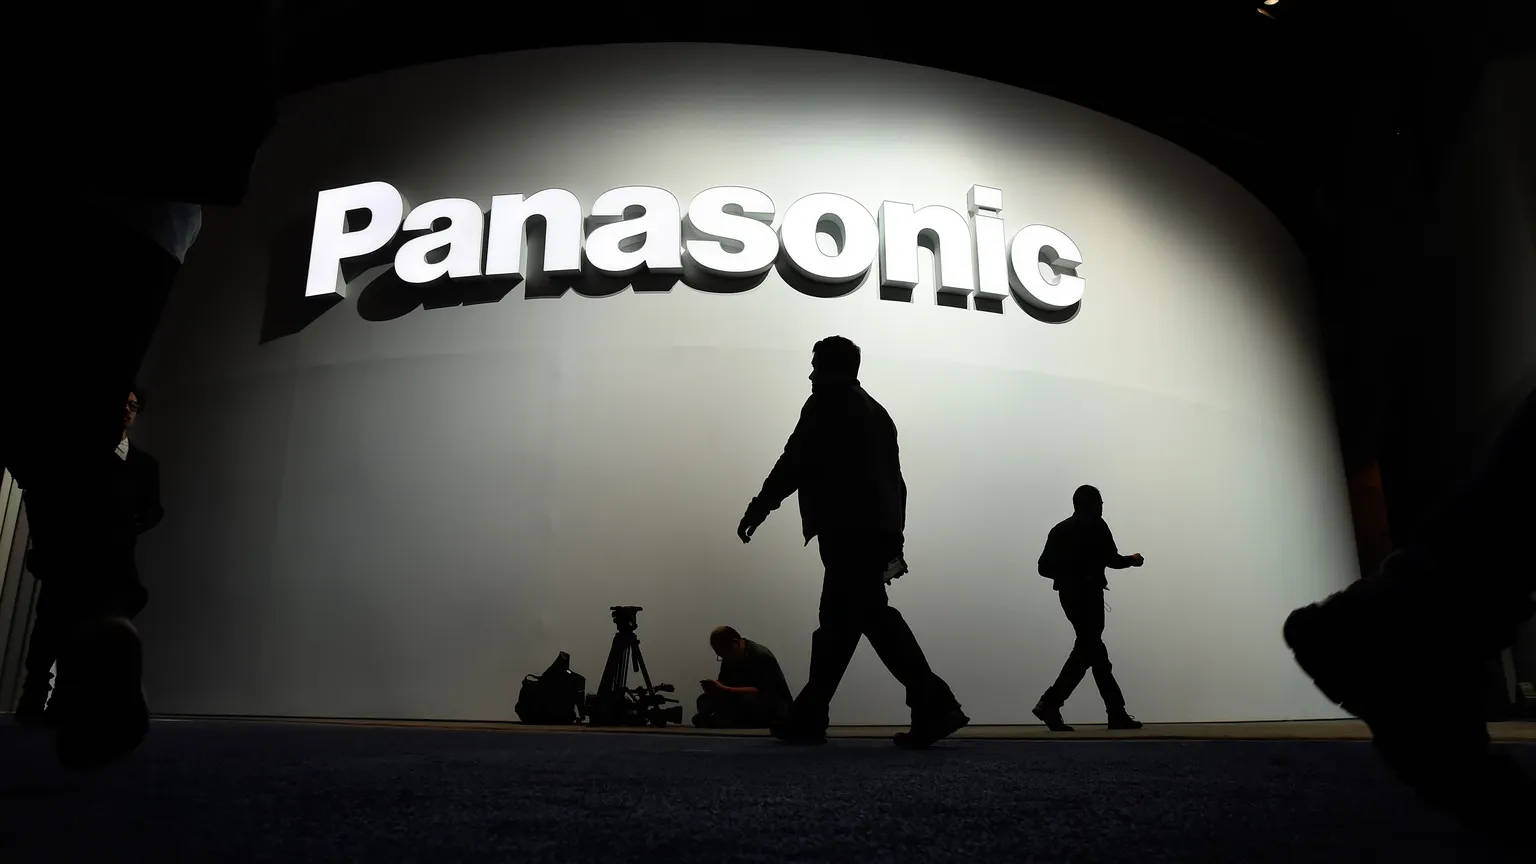 Panasonic Silhouette Men